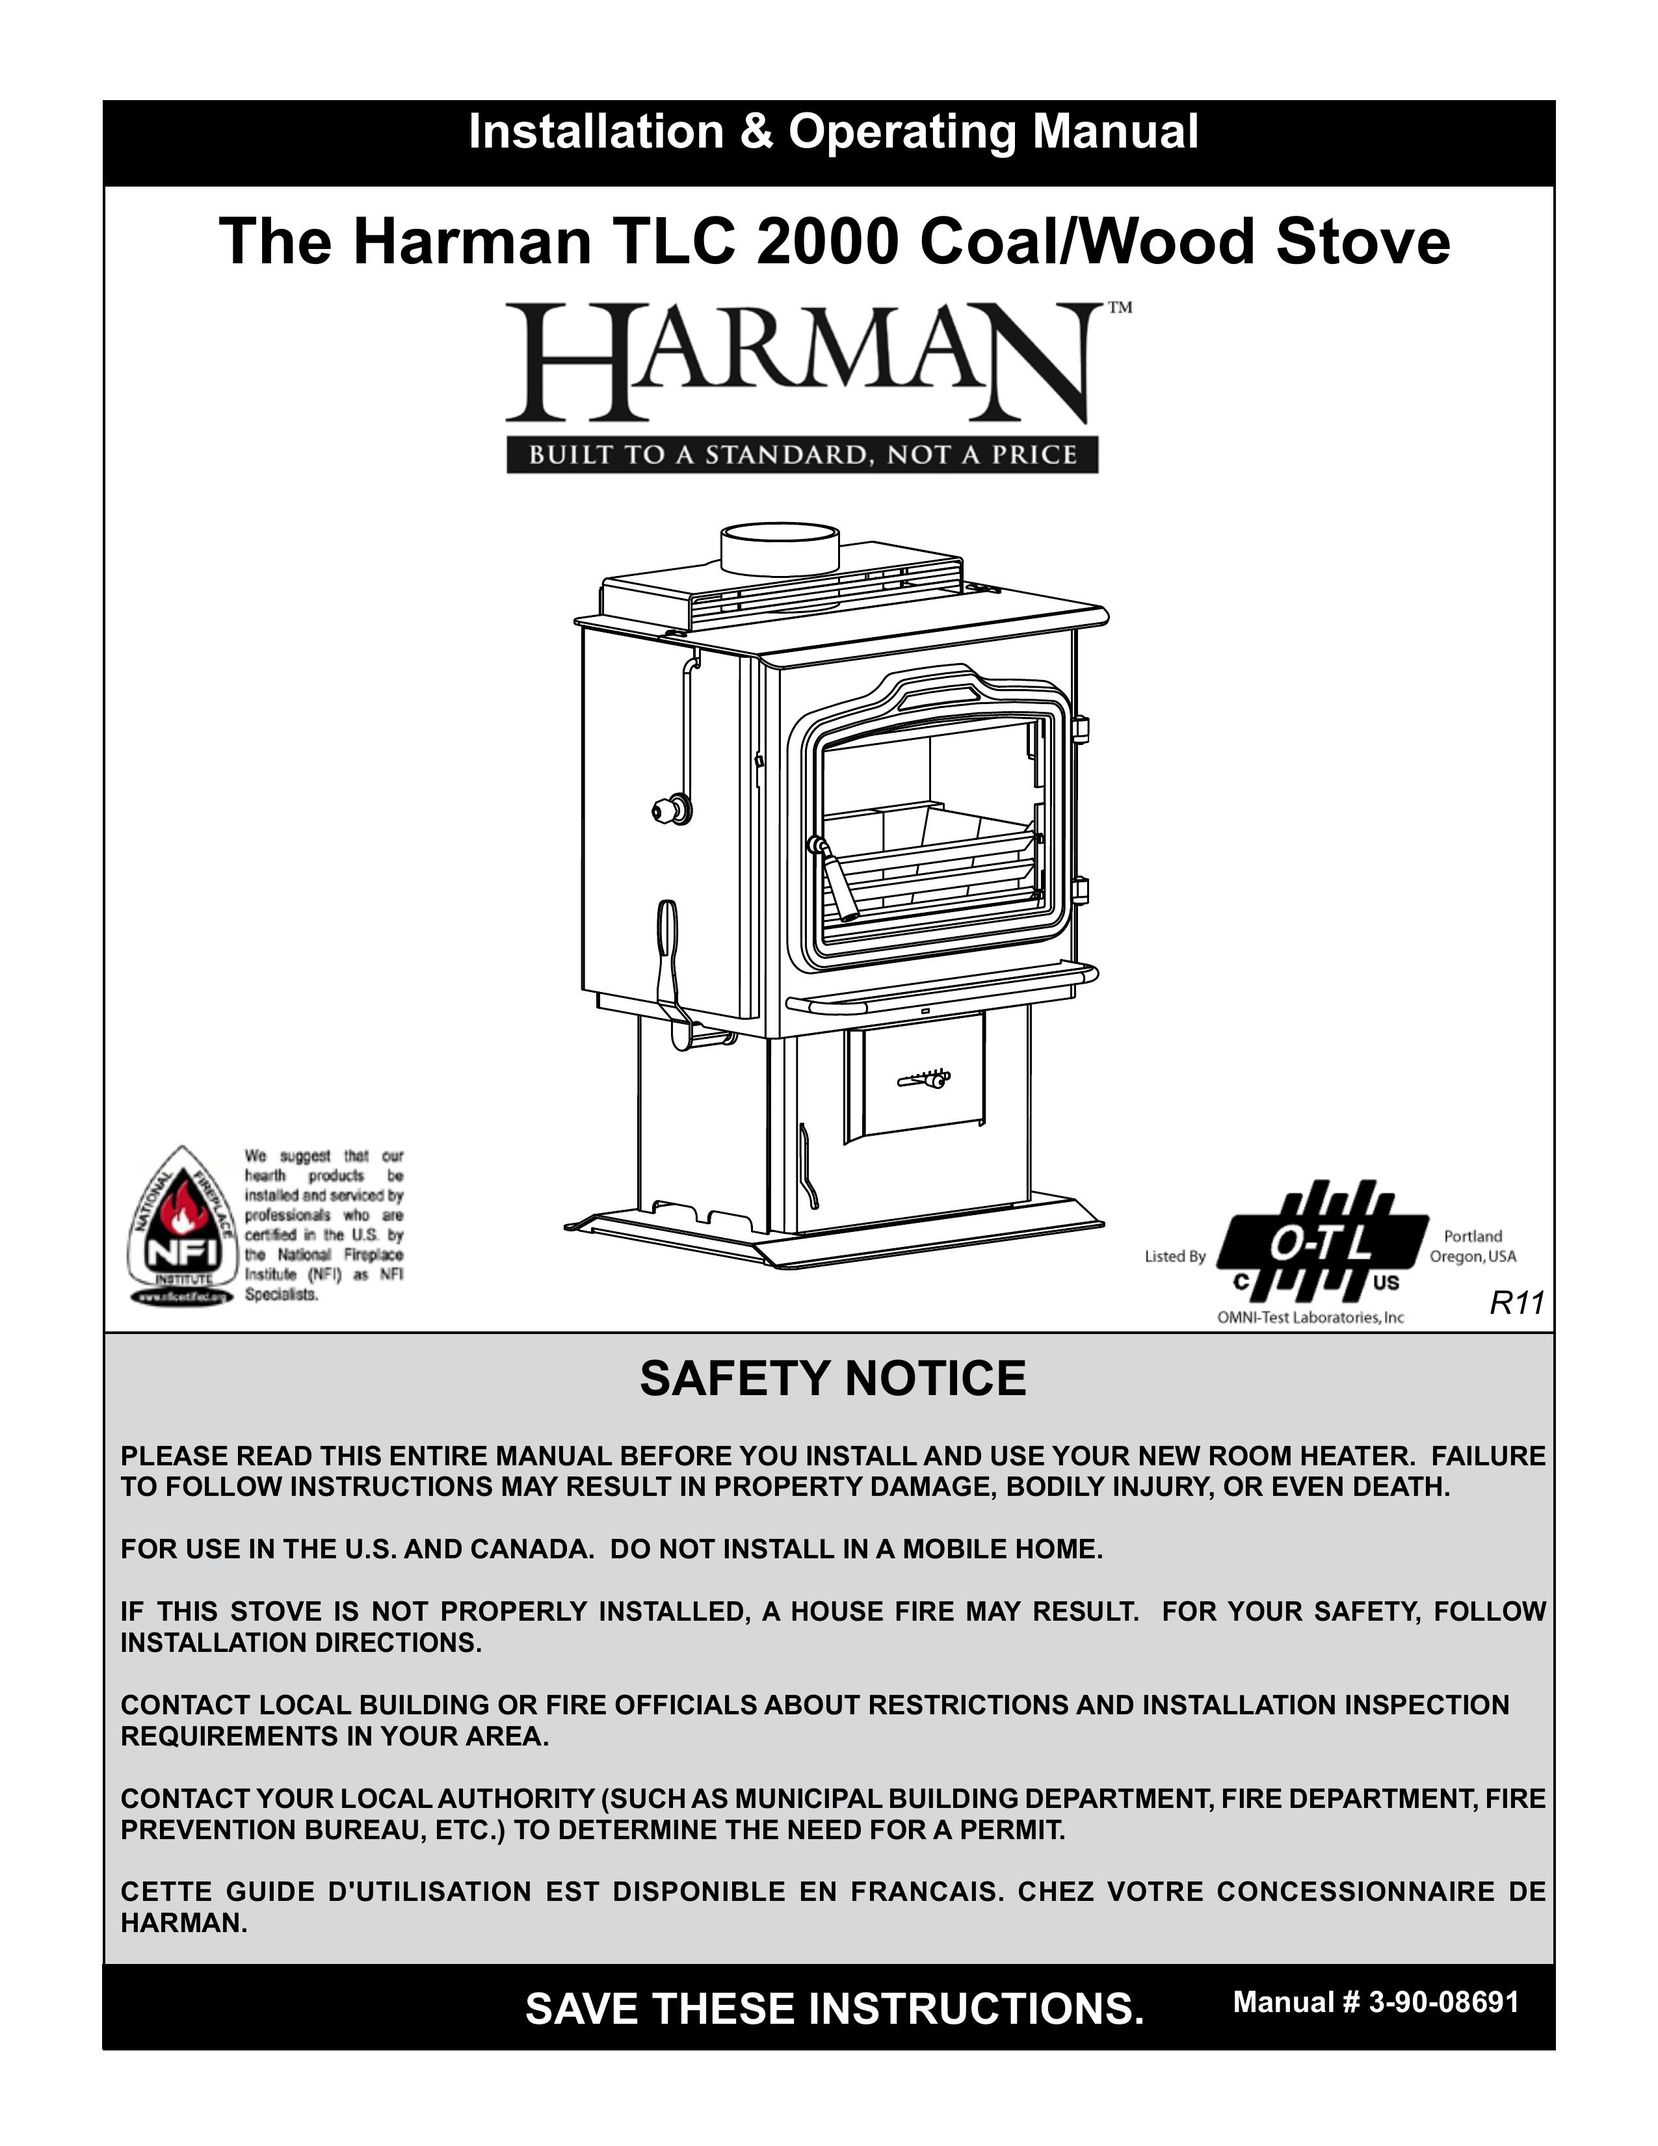 Harman Stove Company TLC 2000 Stove User Manual